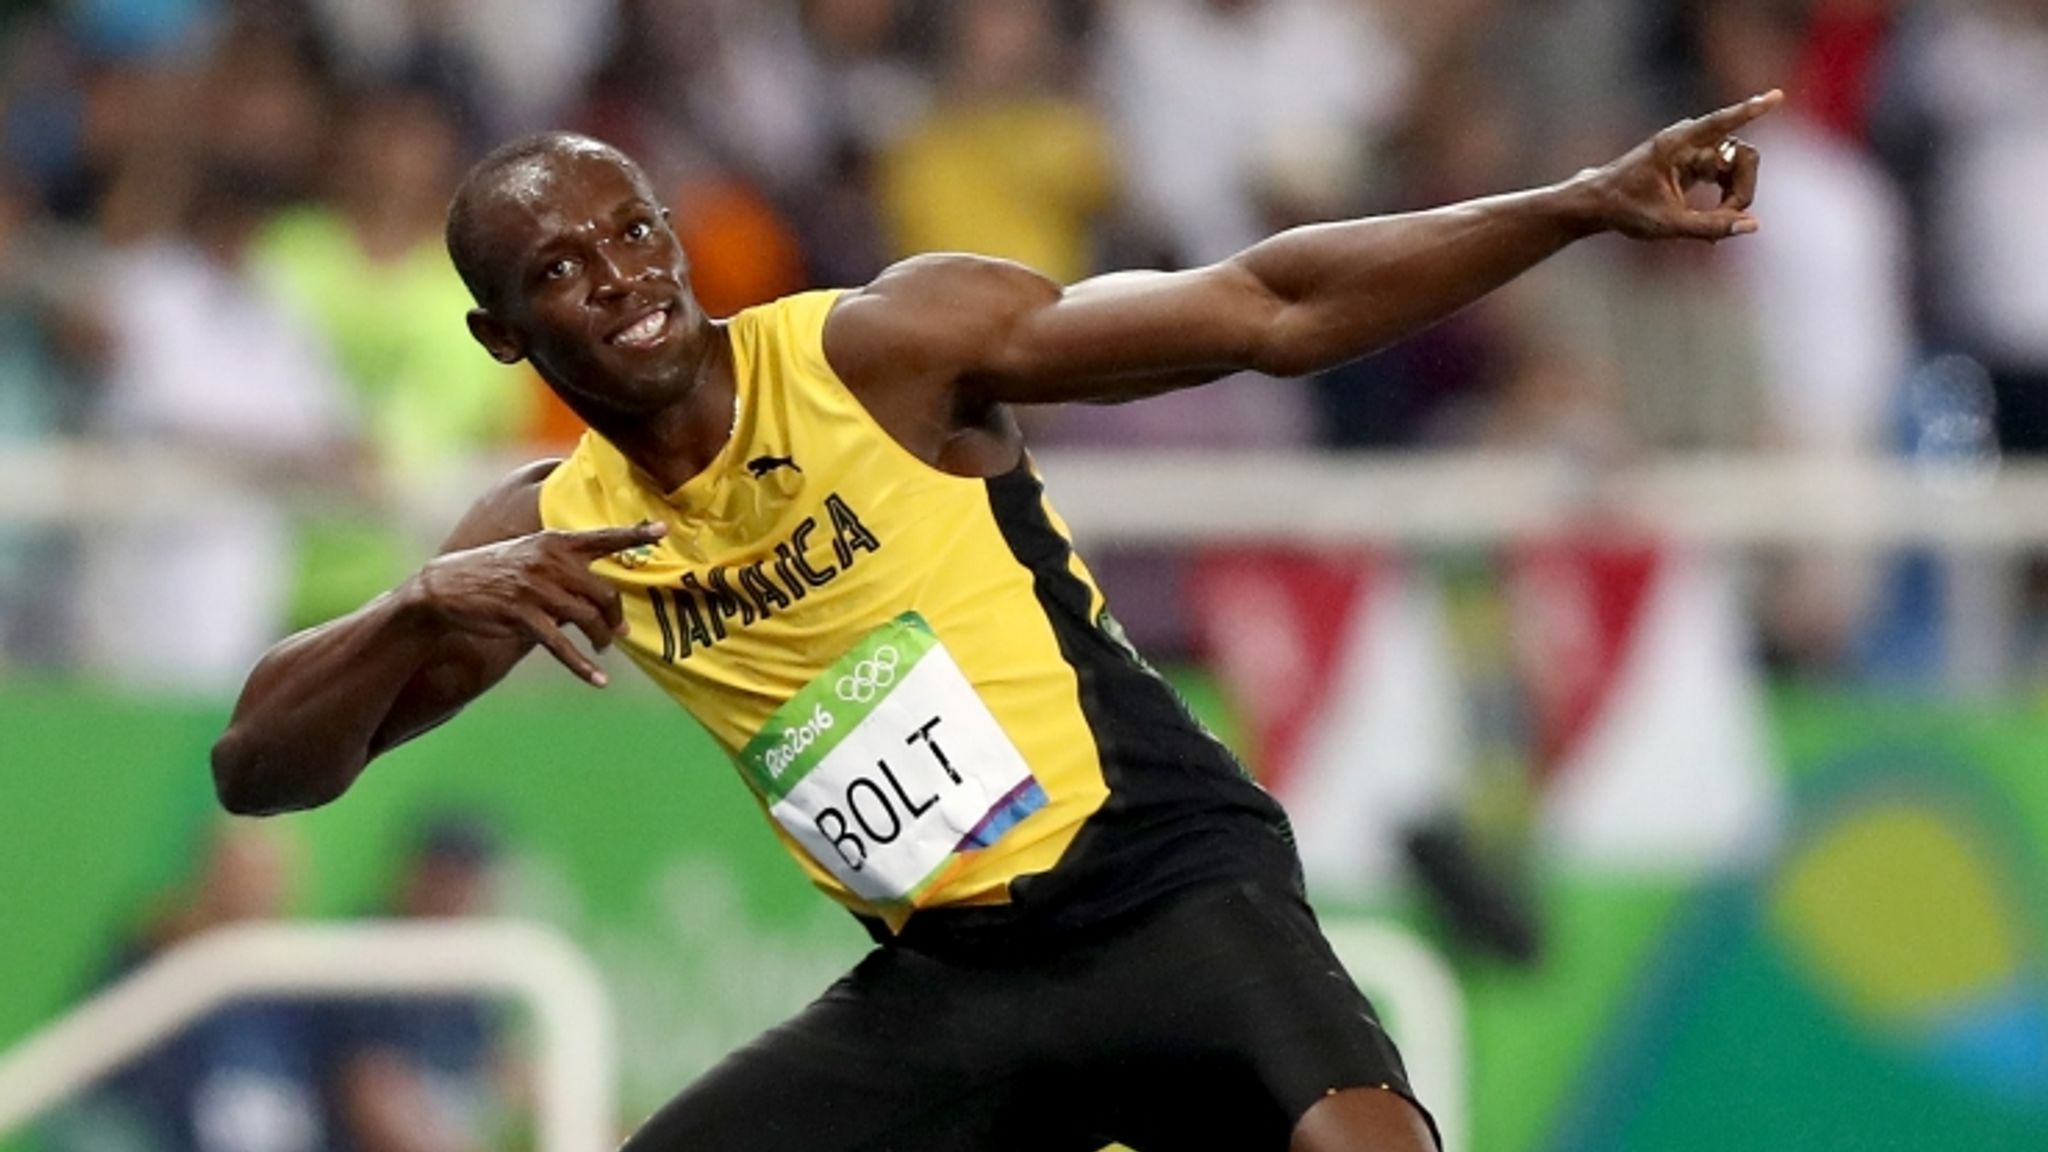 Usain Bolt: World's fastest man ready for last Olympics - Sports Illustrated